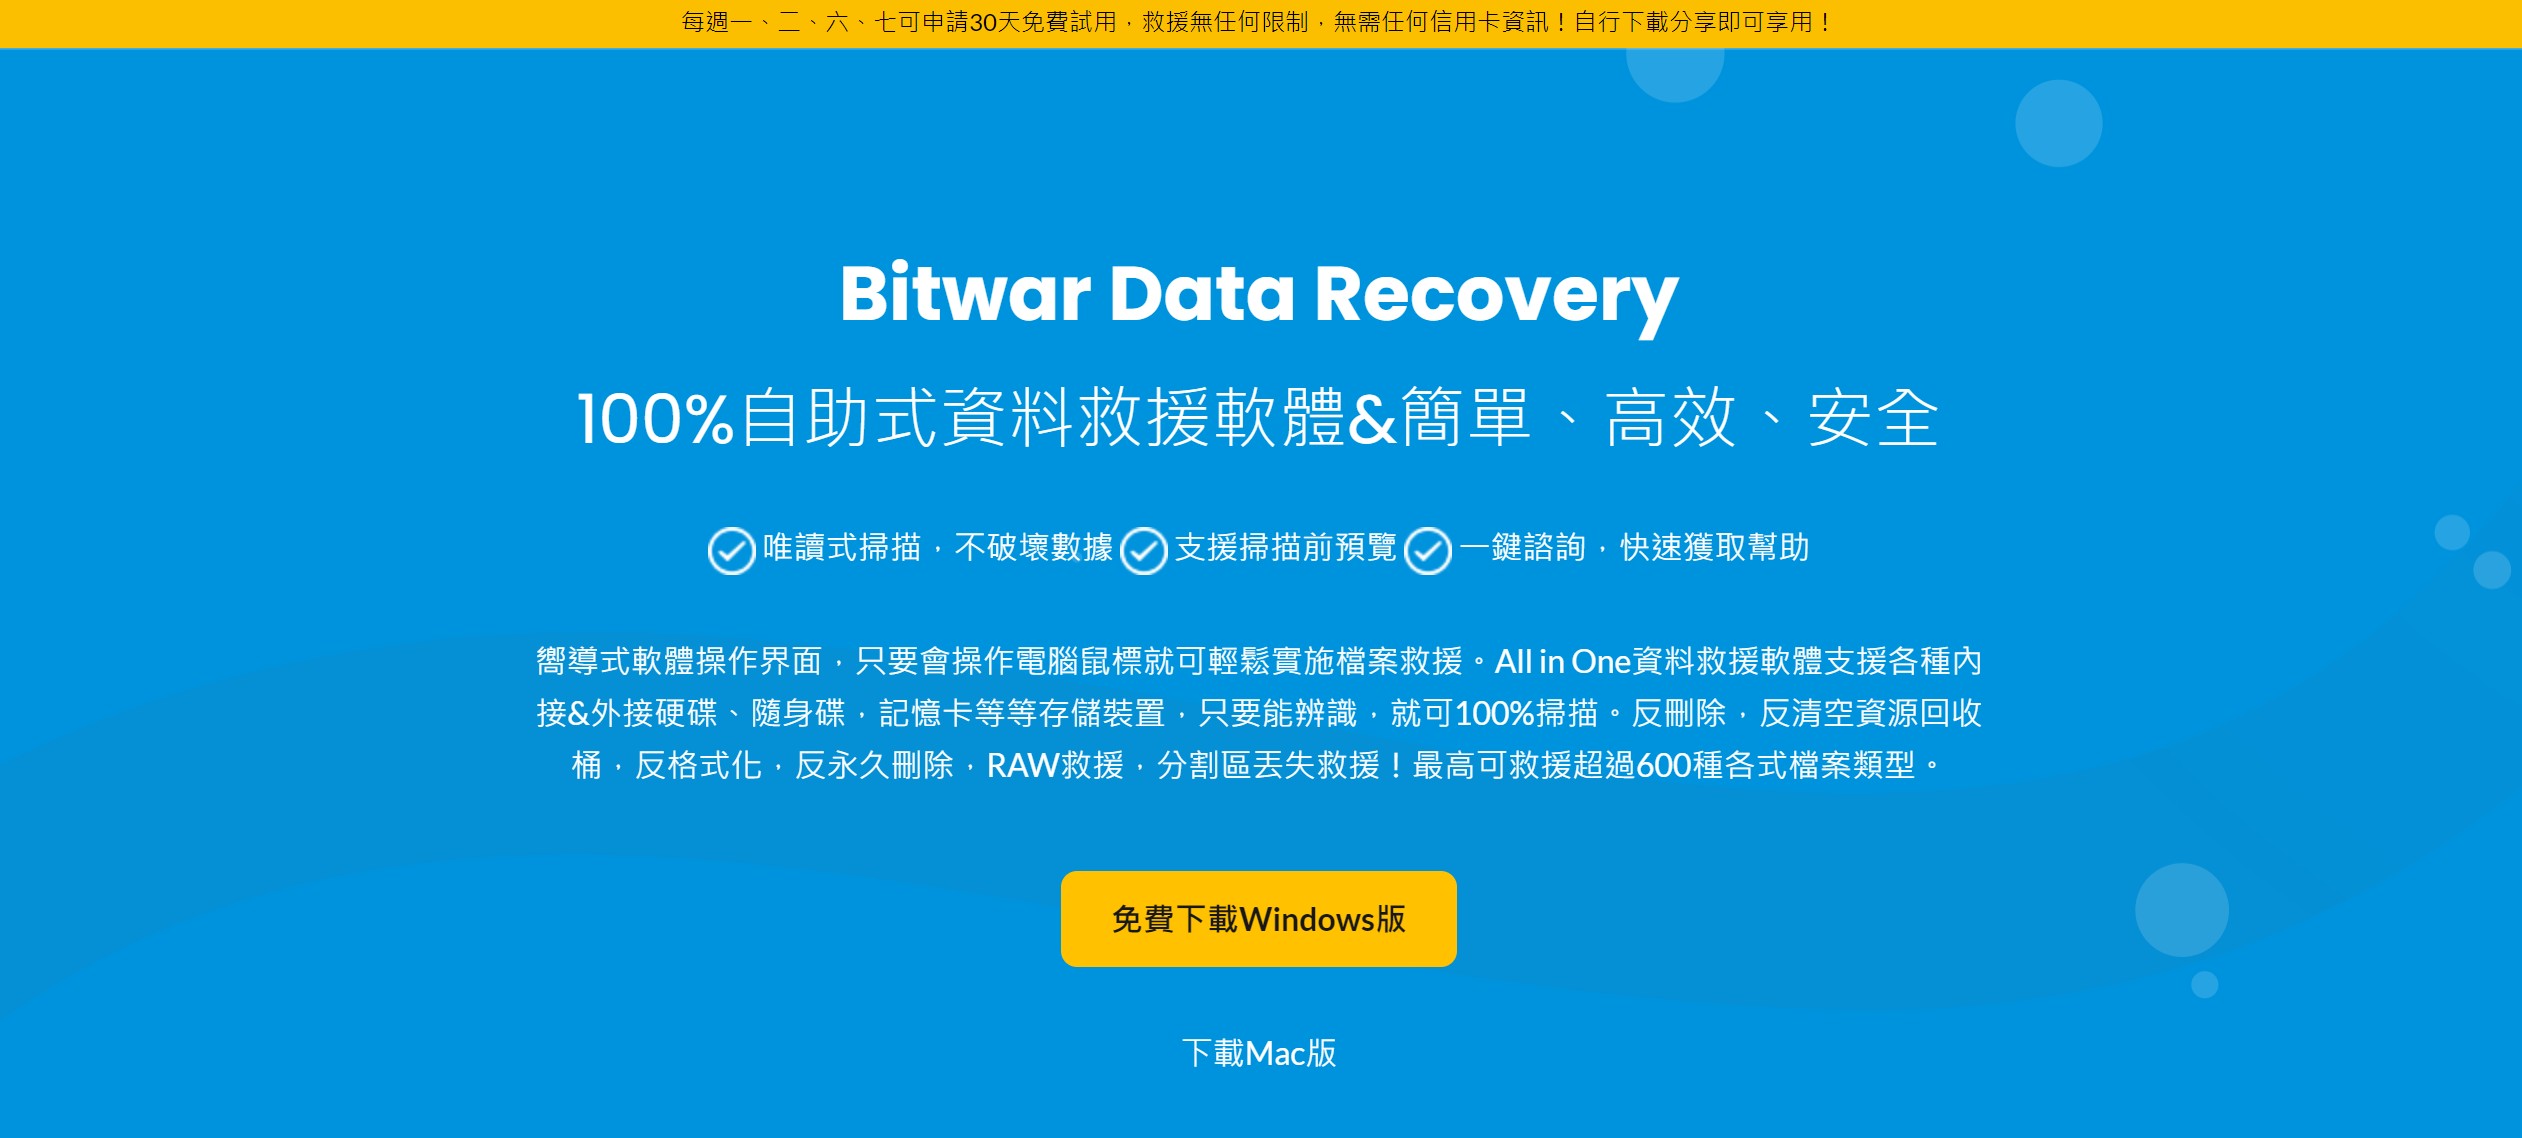 bitwar data recovery 免費vip活動